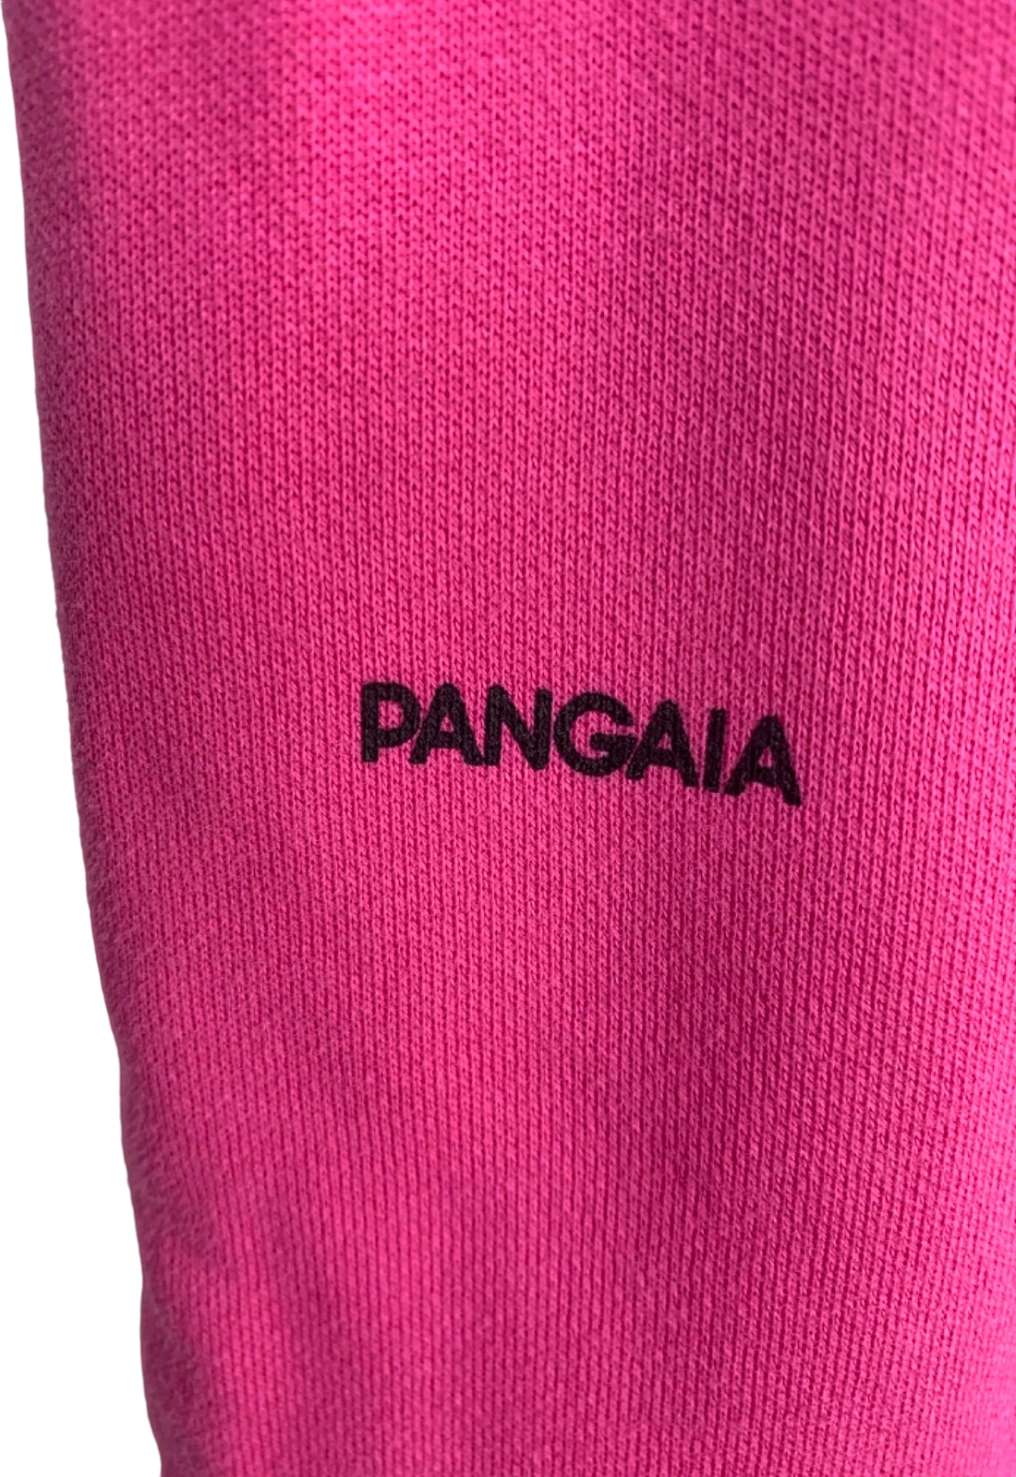 PANGAIA FLAMINGO PINK 365 Signature ORGANIC COTTON Track Pants UK L